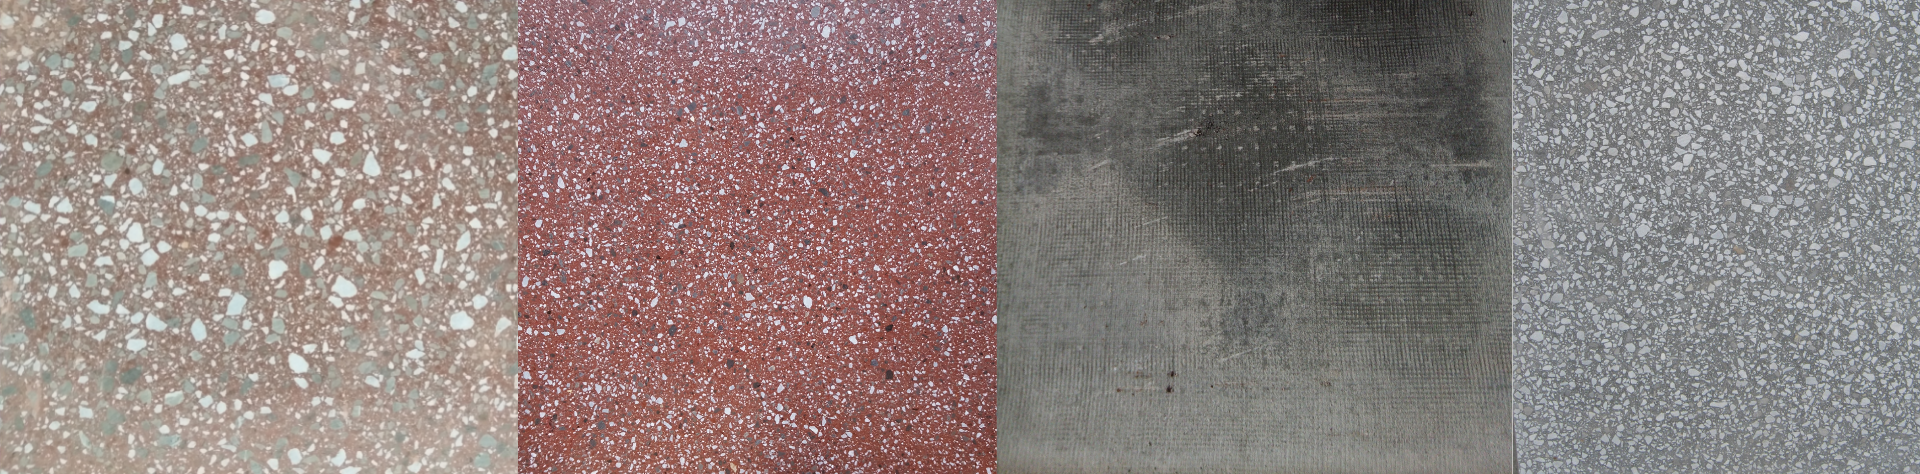 плитка БМП 6КА-3 (6К3), плита бетонно-мозаичная, шлифованная